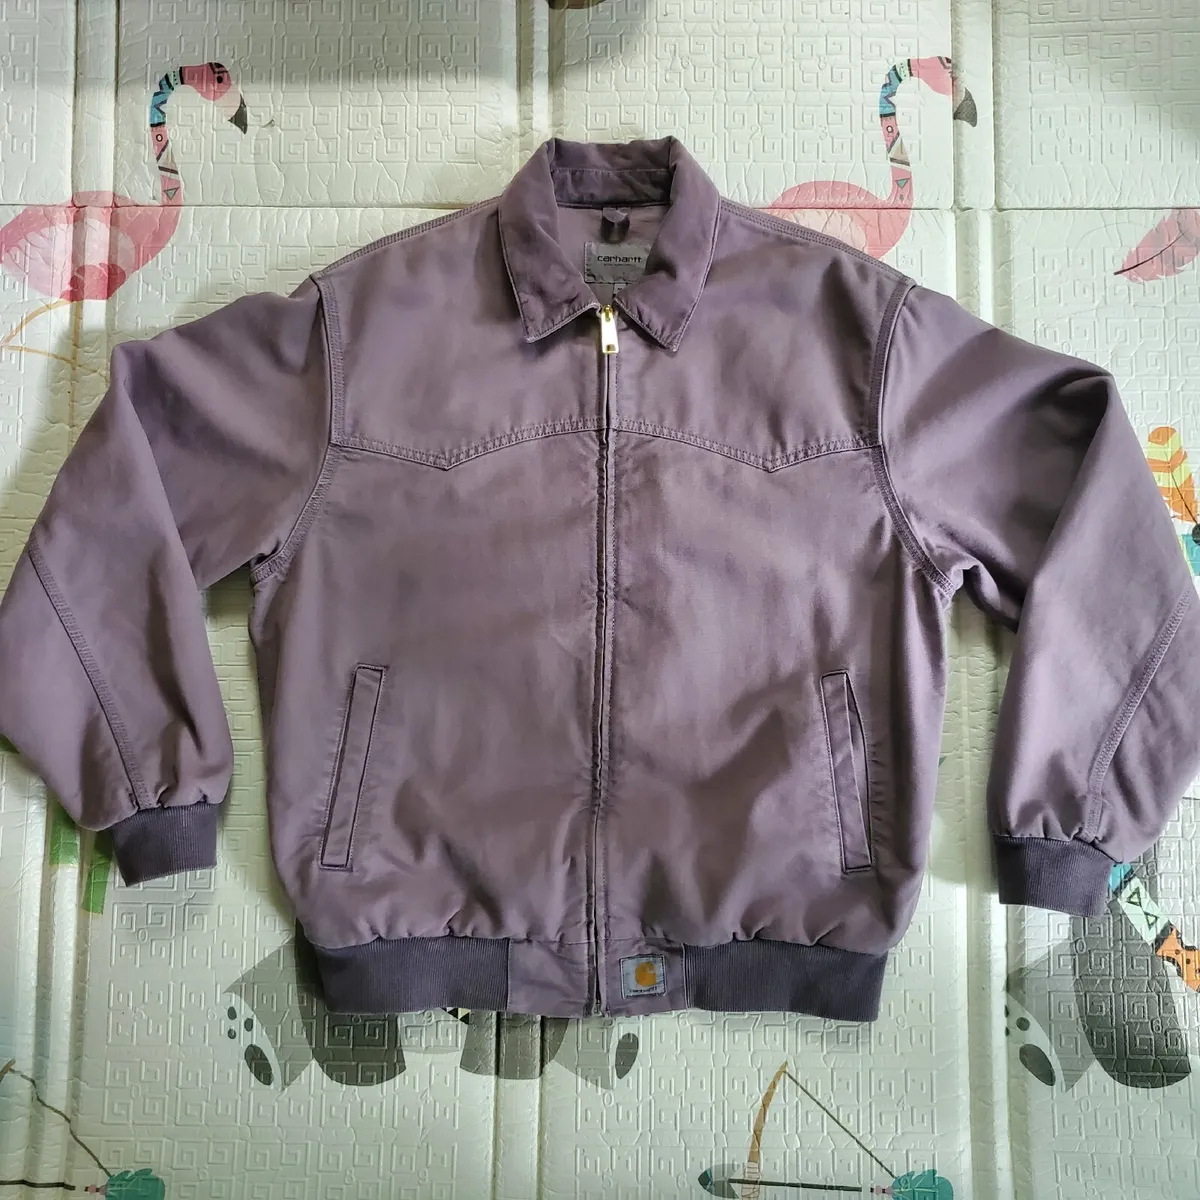 Carhartt WIP OG Santa Fe Jacket - Medium RAZZMIC Purple | eBay